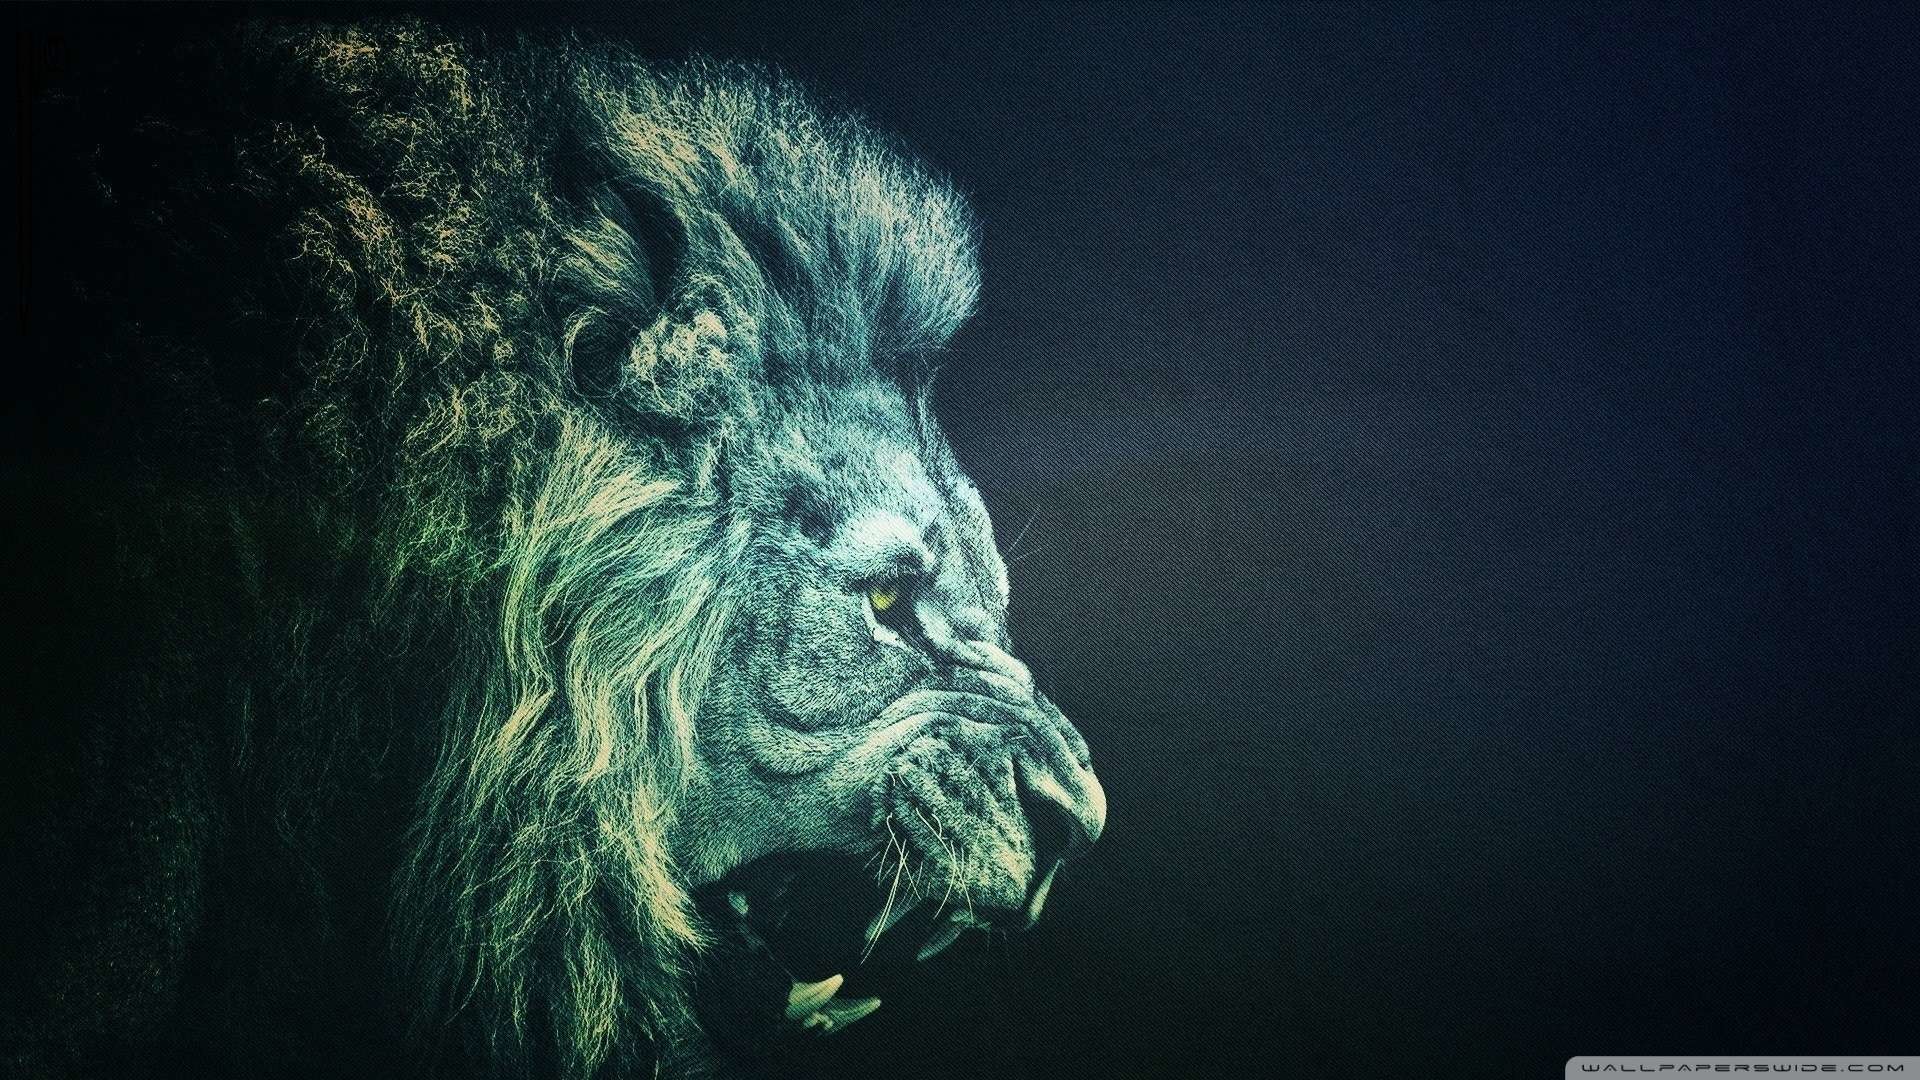 Cool Lion Wallpaper